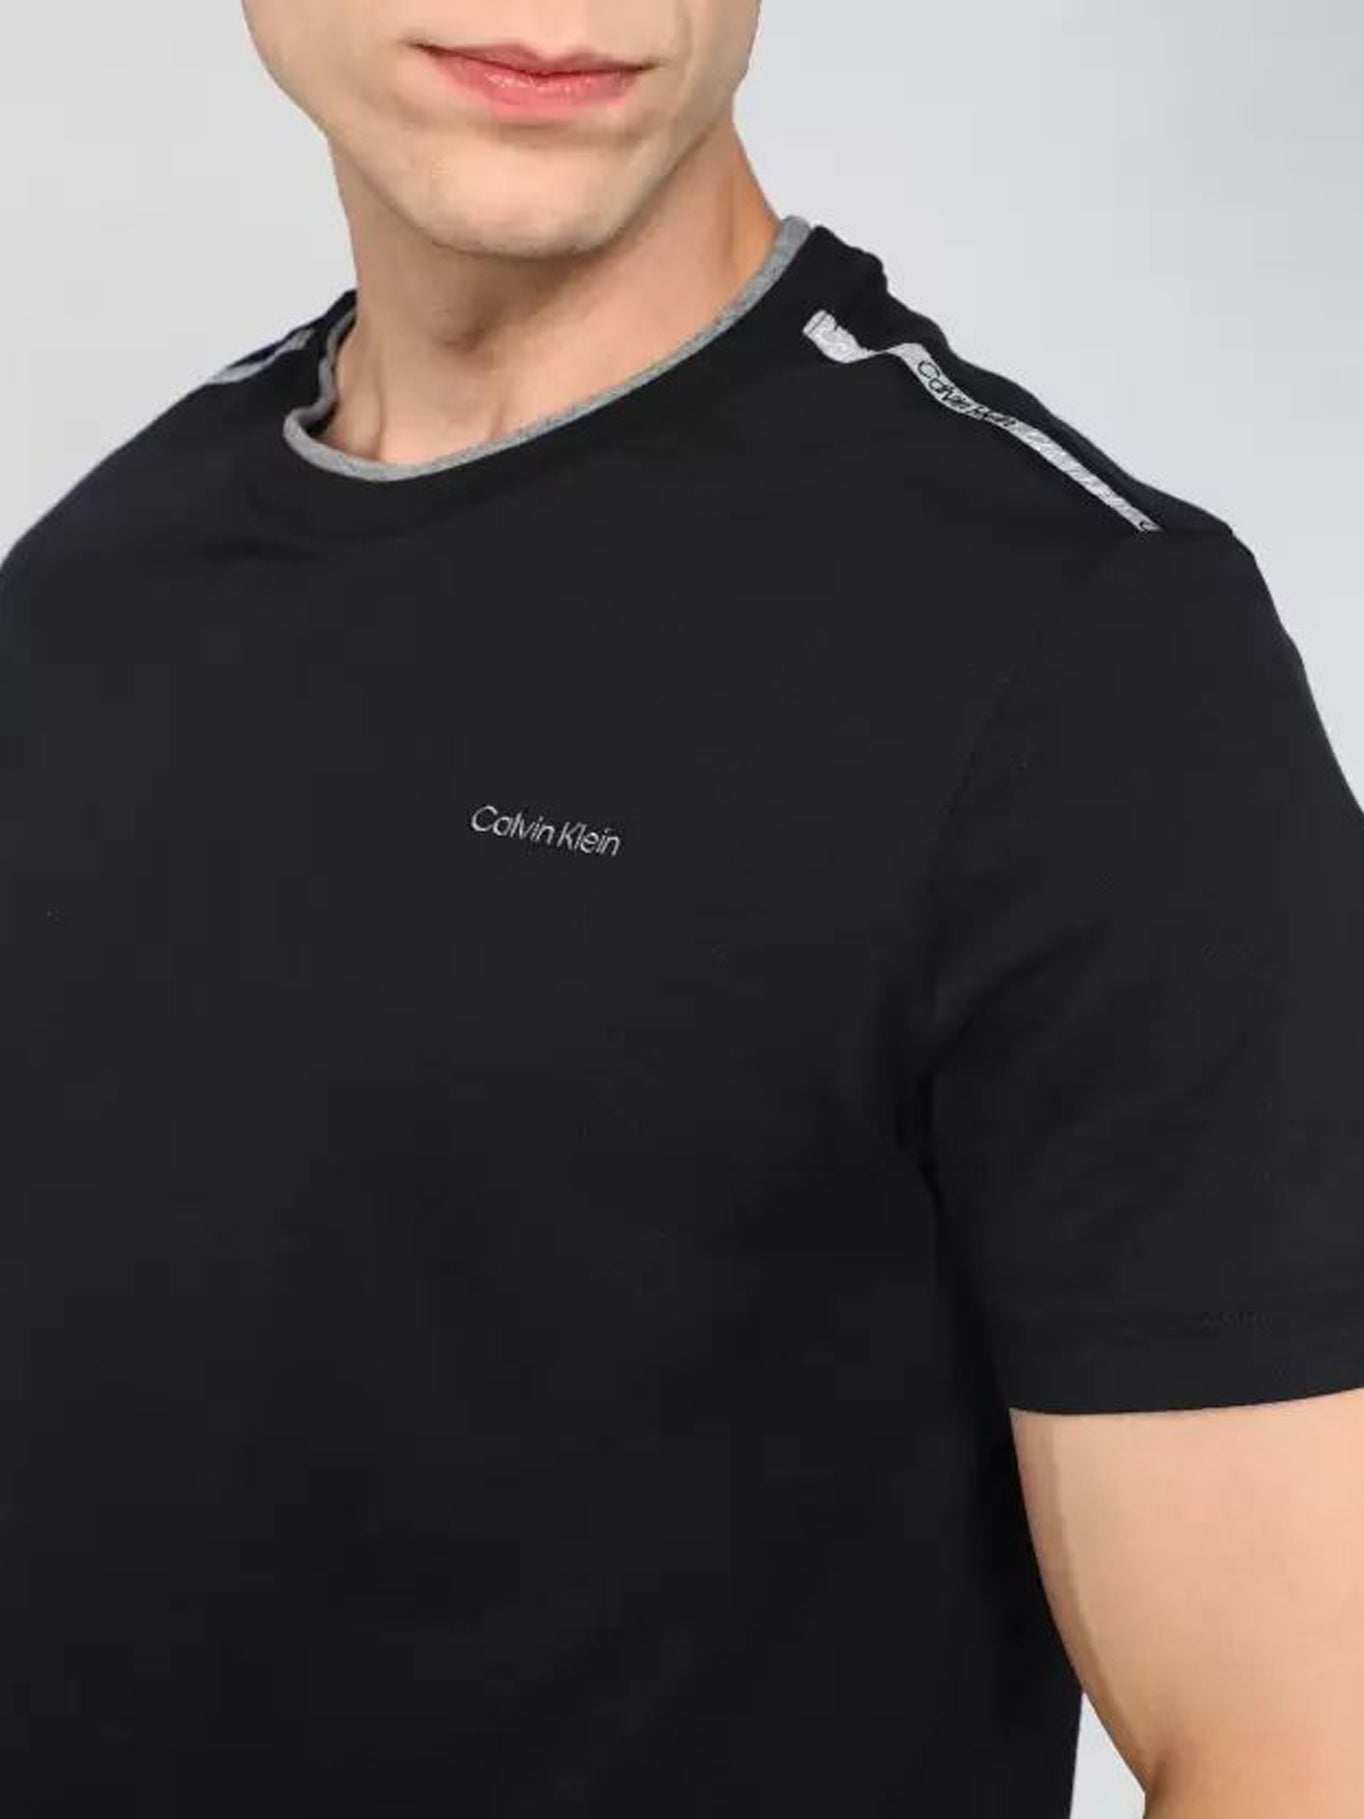 camiseta-calvin-klein-manga-corta-liso-p-caballe-1